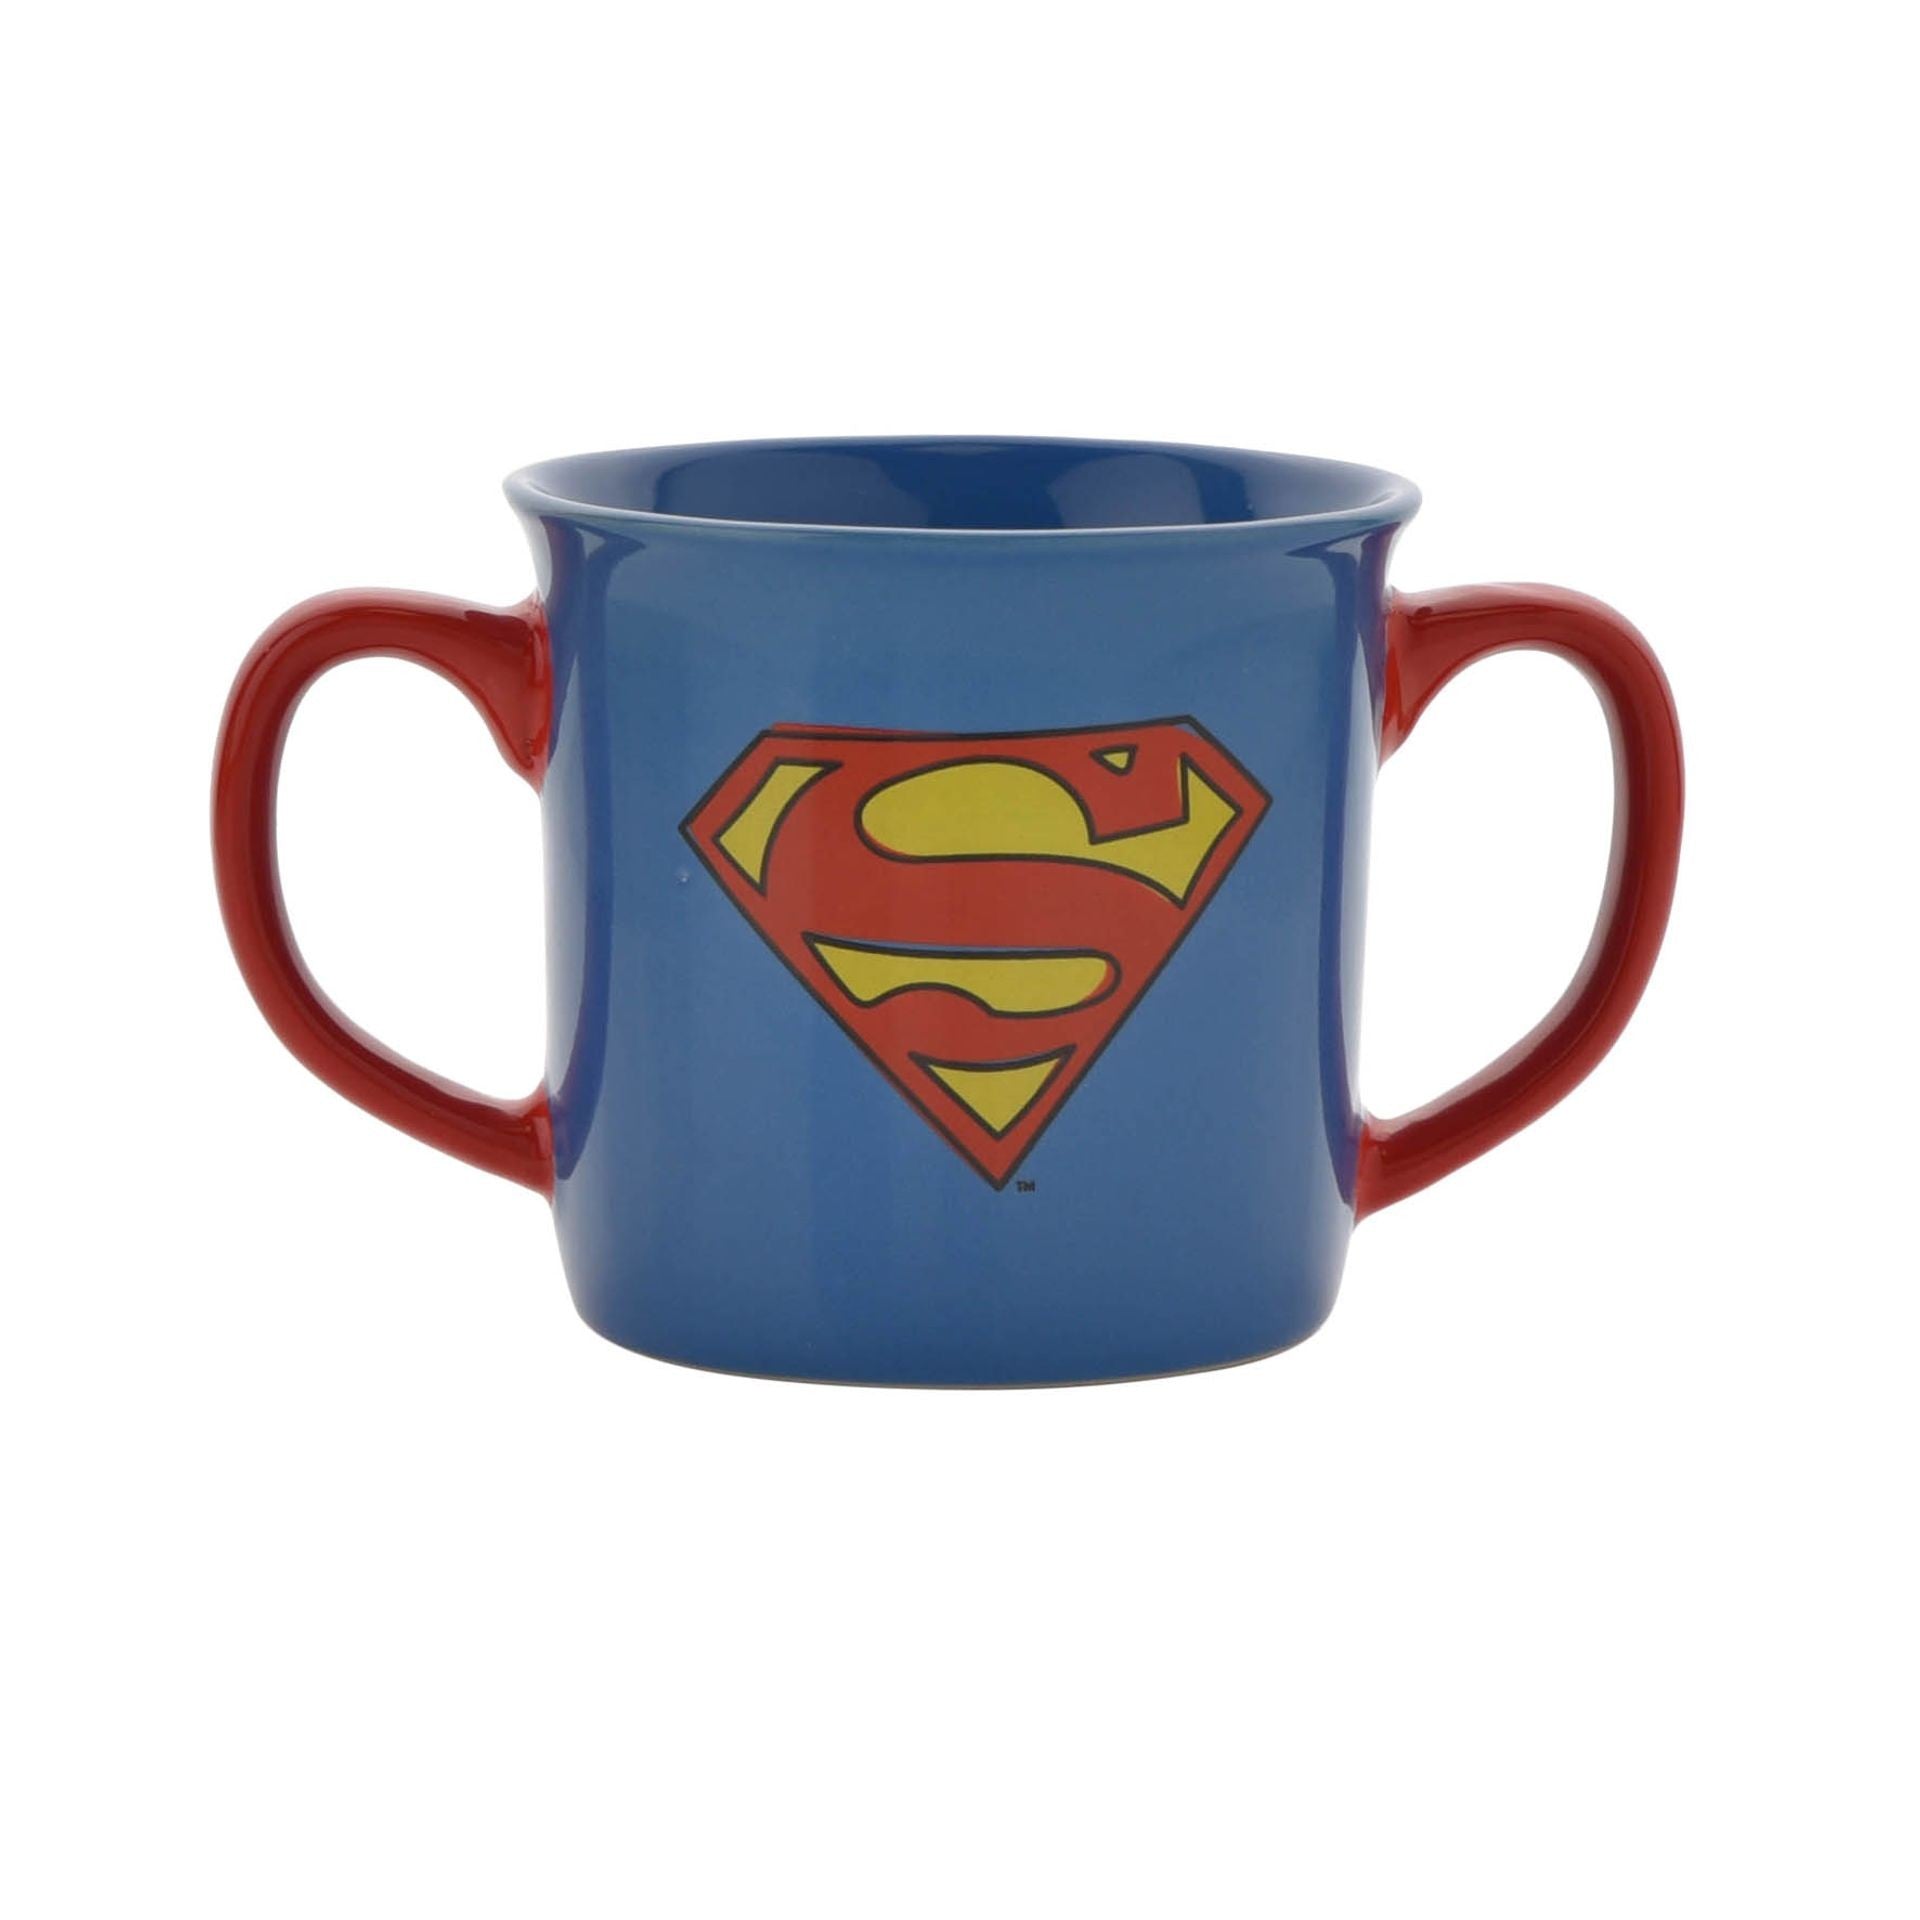 View Warner Bros Superman Double Handed Mug information